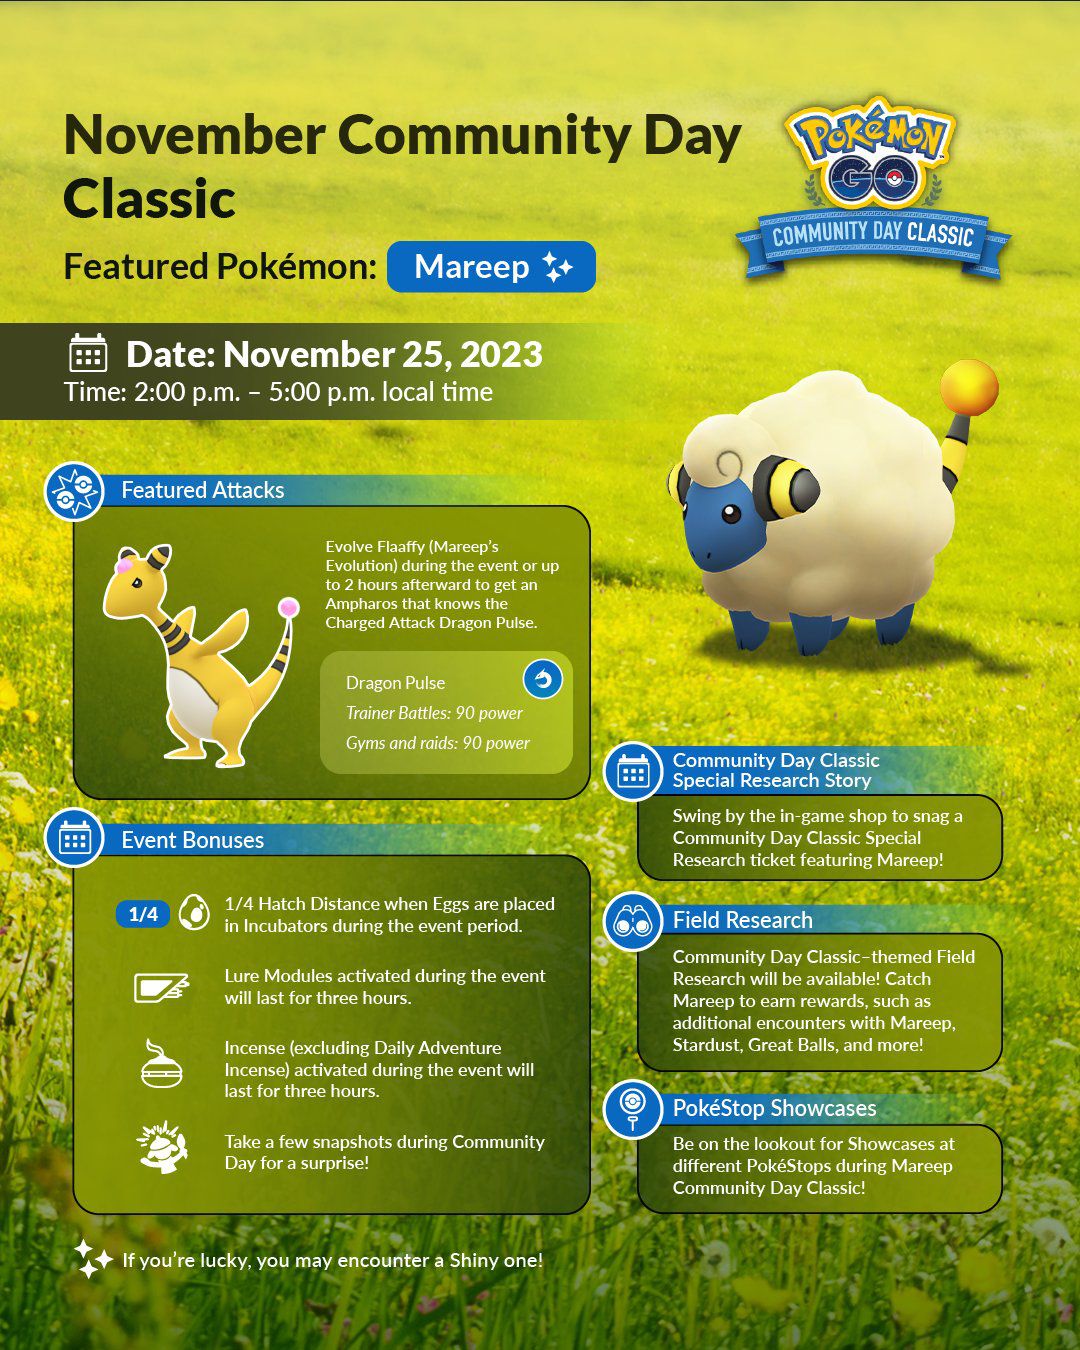 Pokémon Go November Community Day Classic featuring Mareep infographic